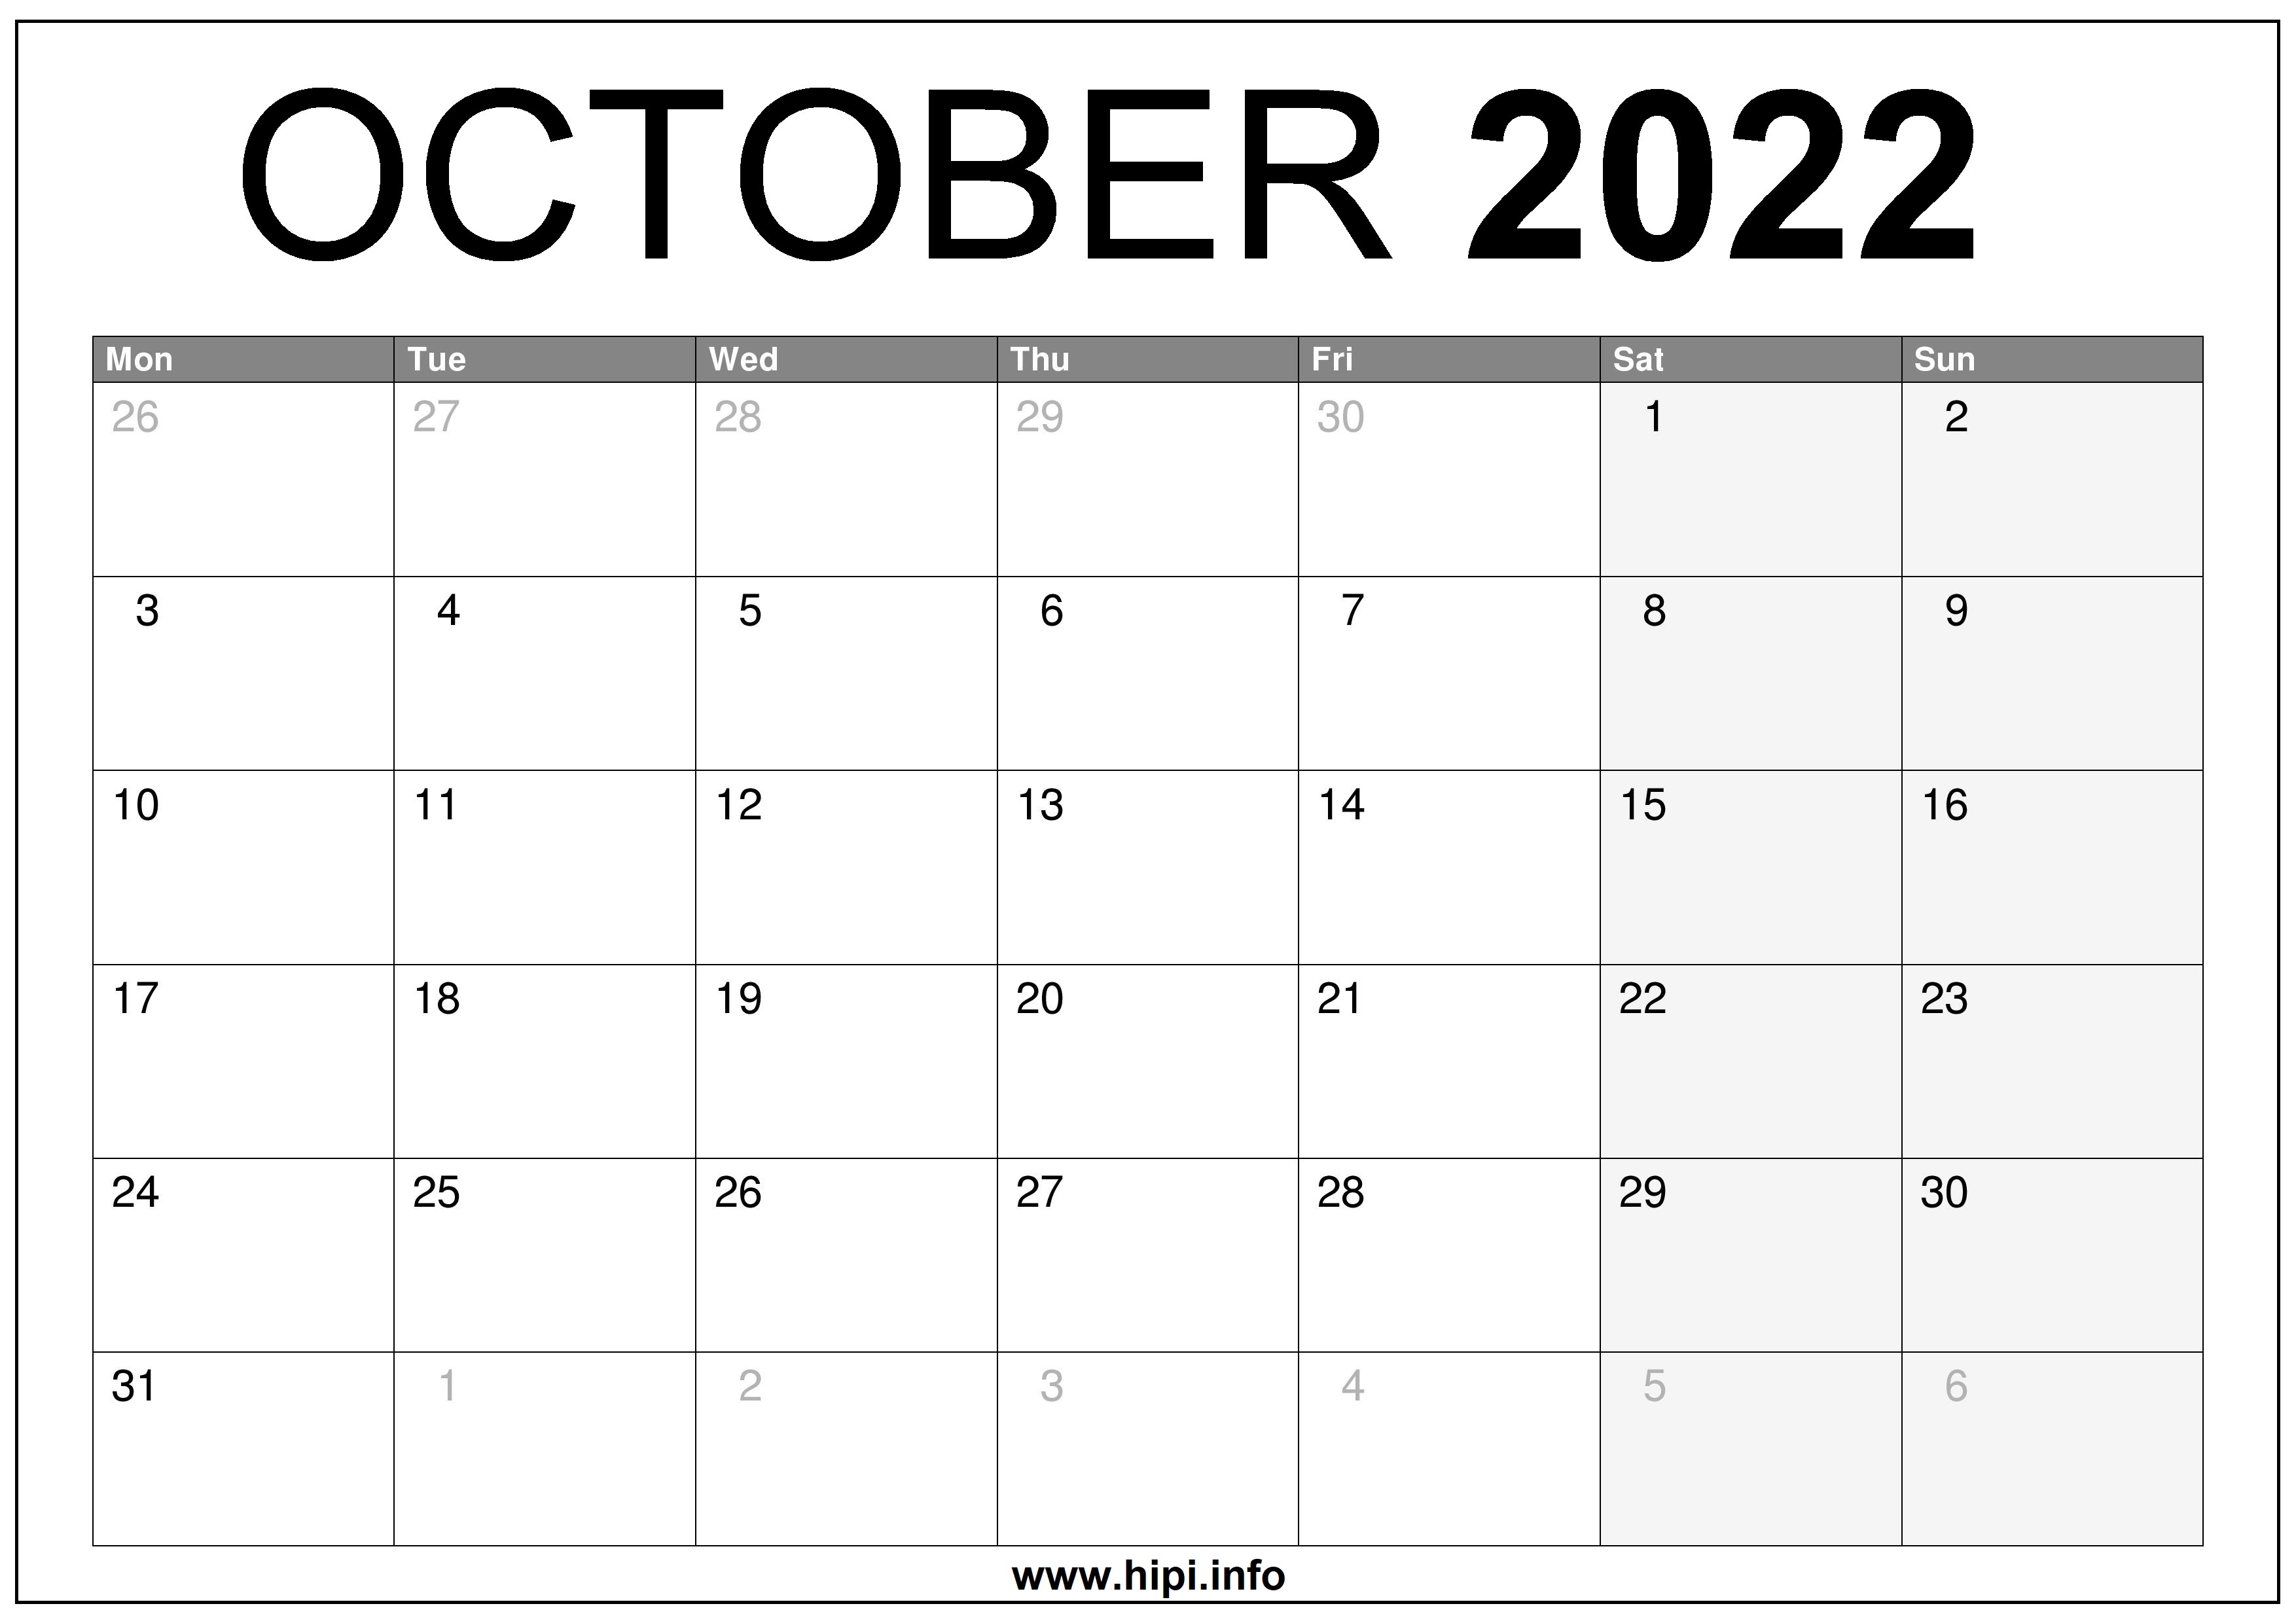 October 2022 Calendar Printable Free October 2022 Uk Calendar Printable Free - Hipi.info | Calendars Printable  Free